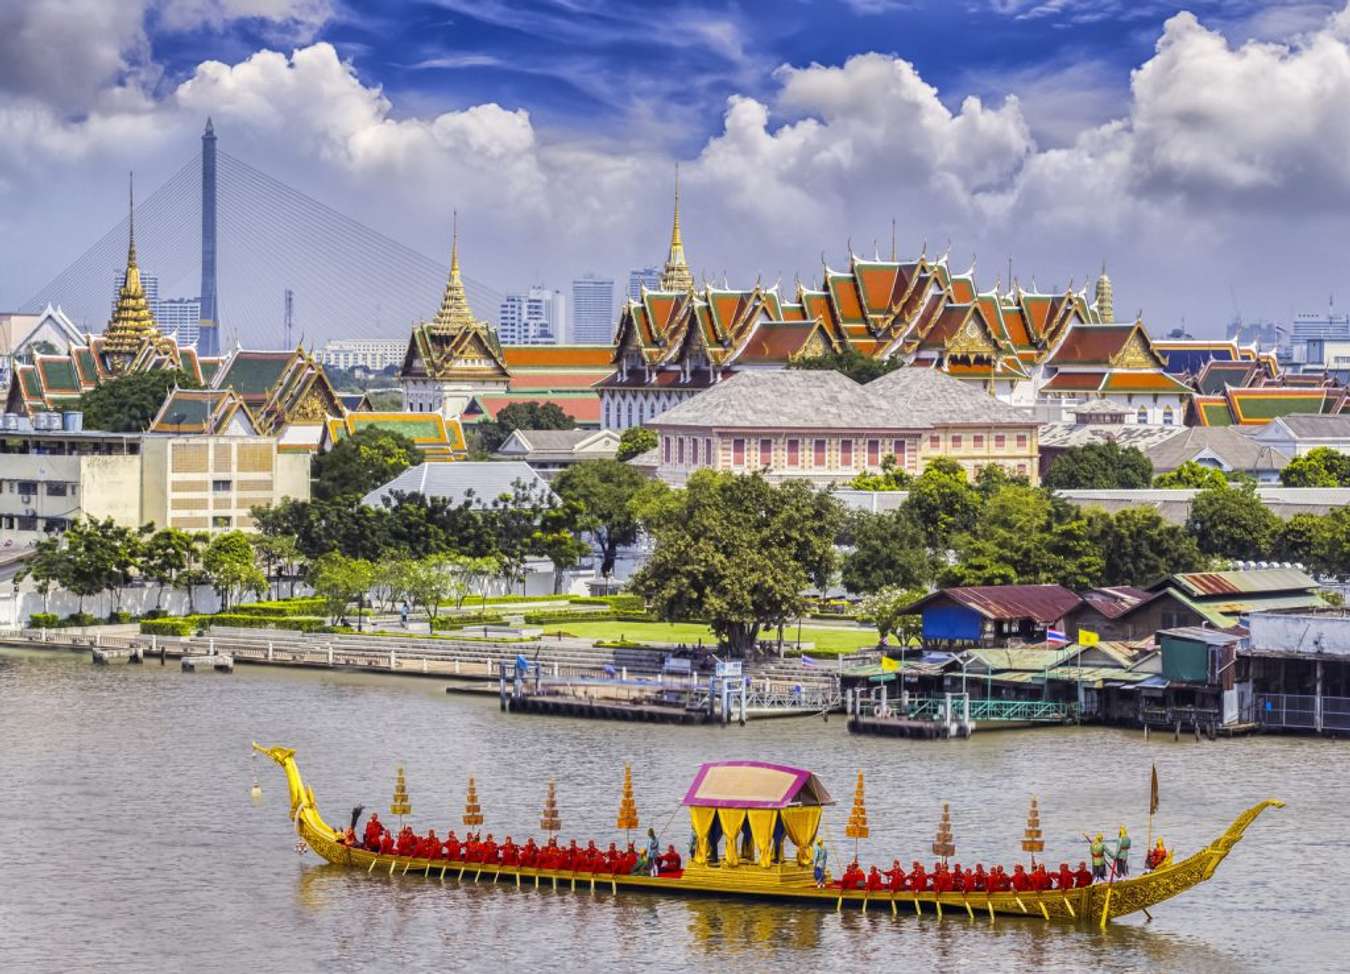 The Grand Palace - Malaysia to Bangkok